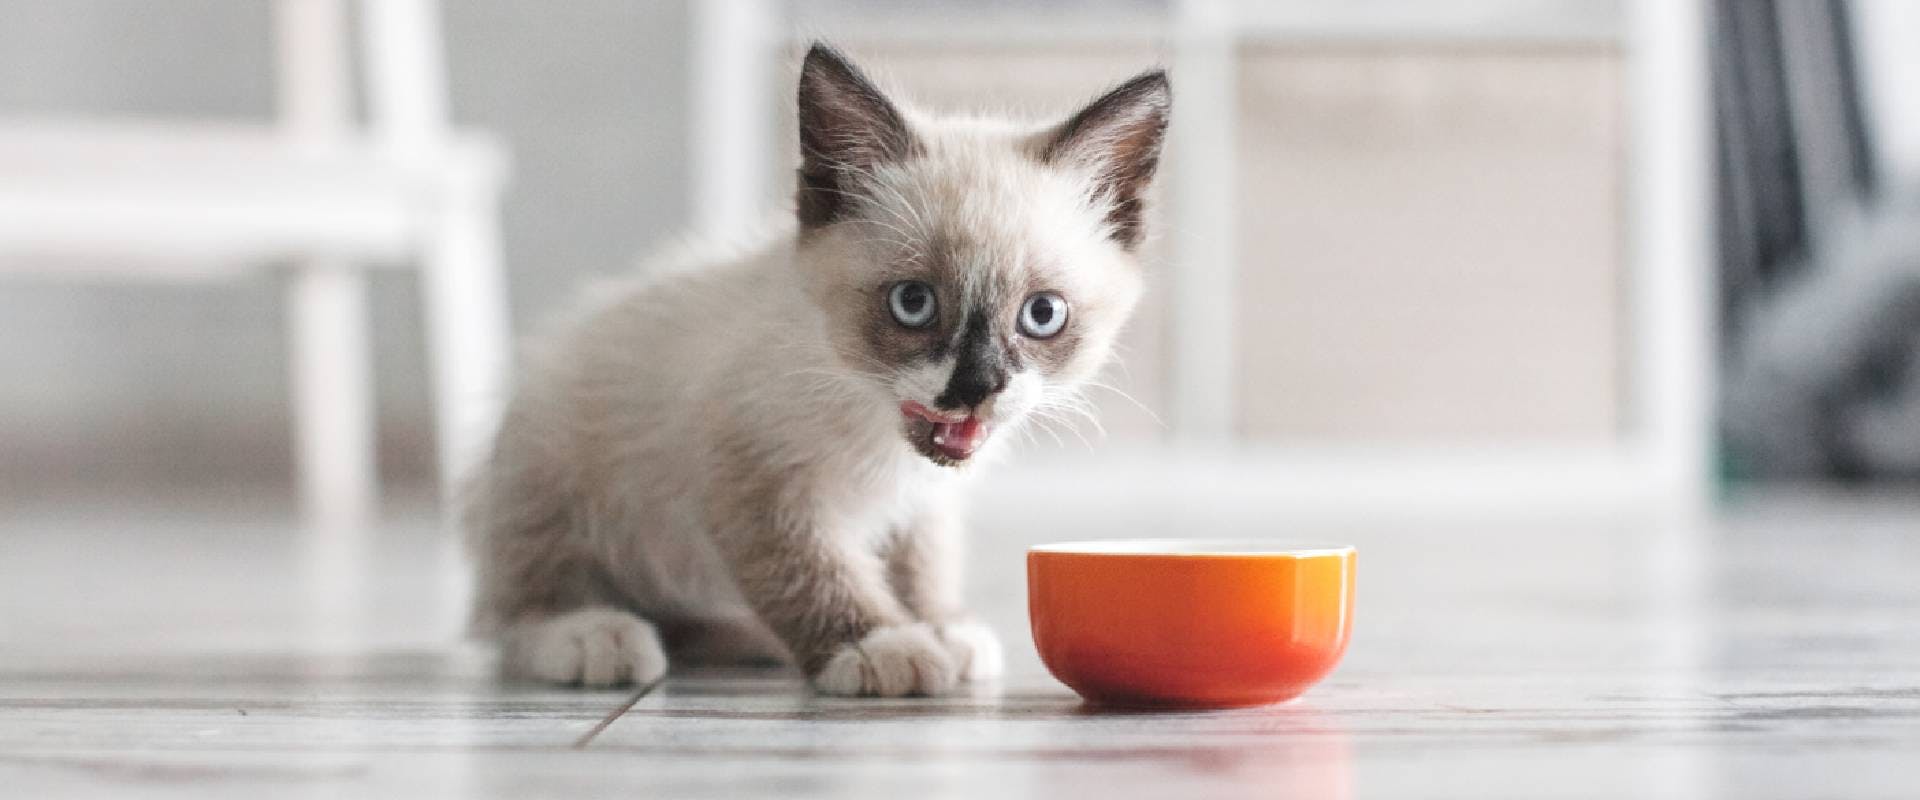 gray kitten next to an orange bowl